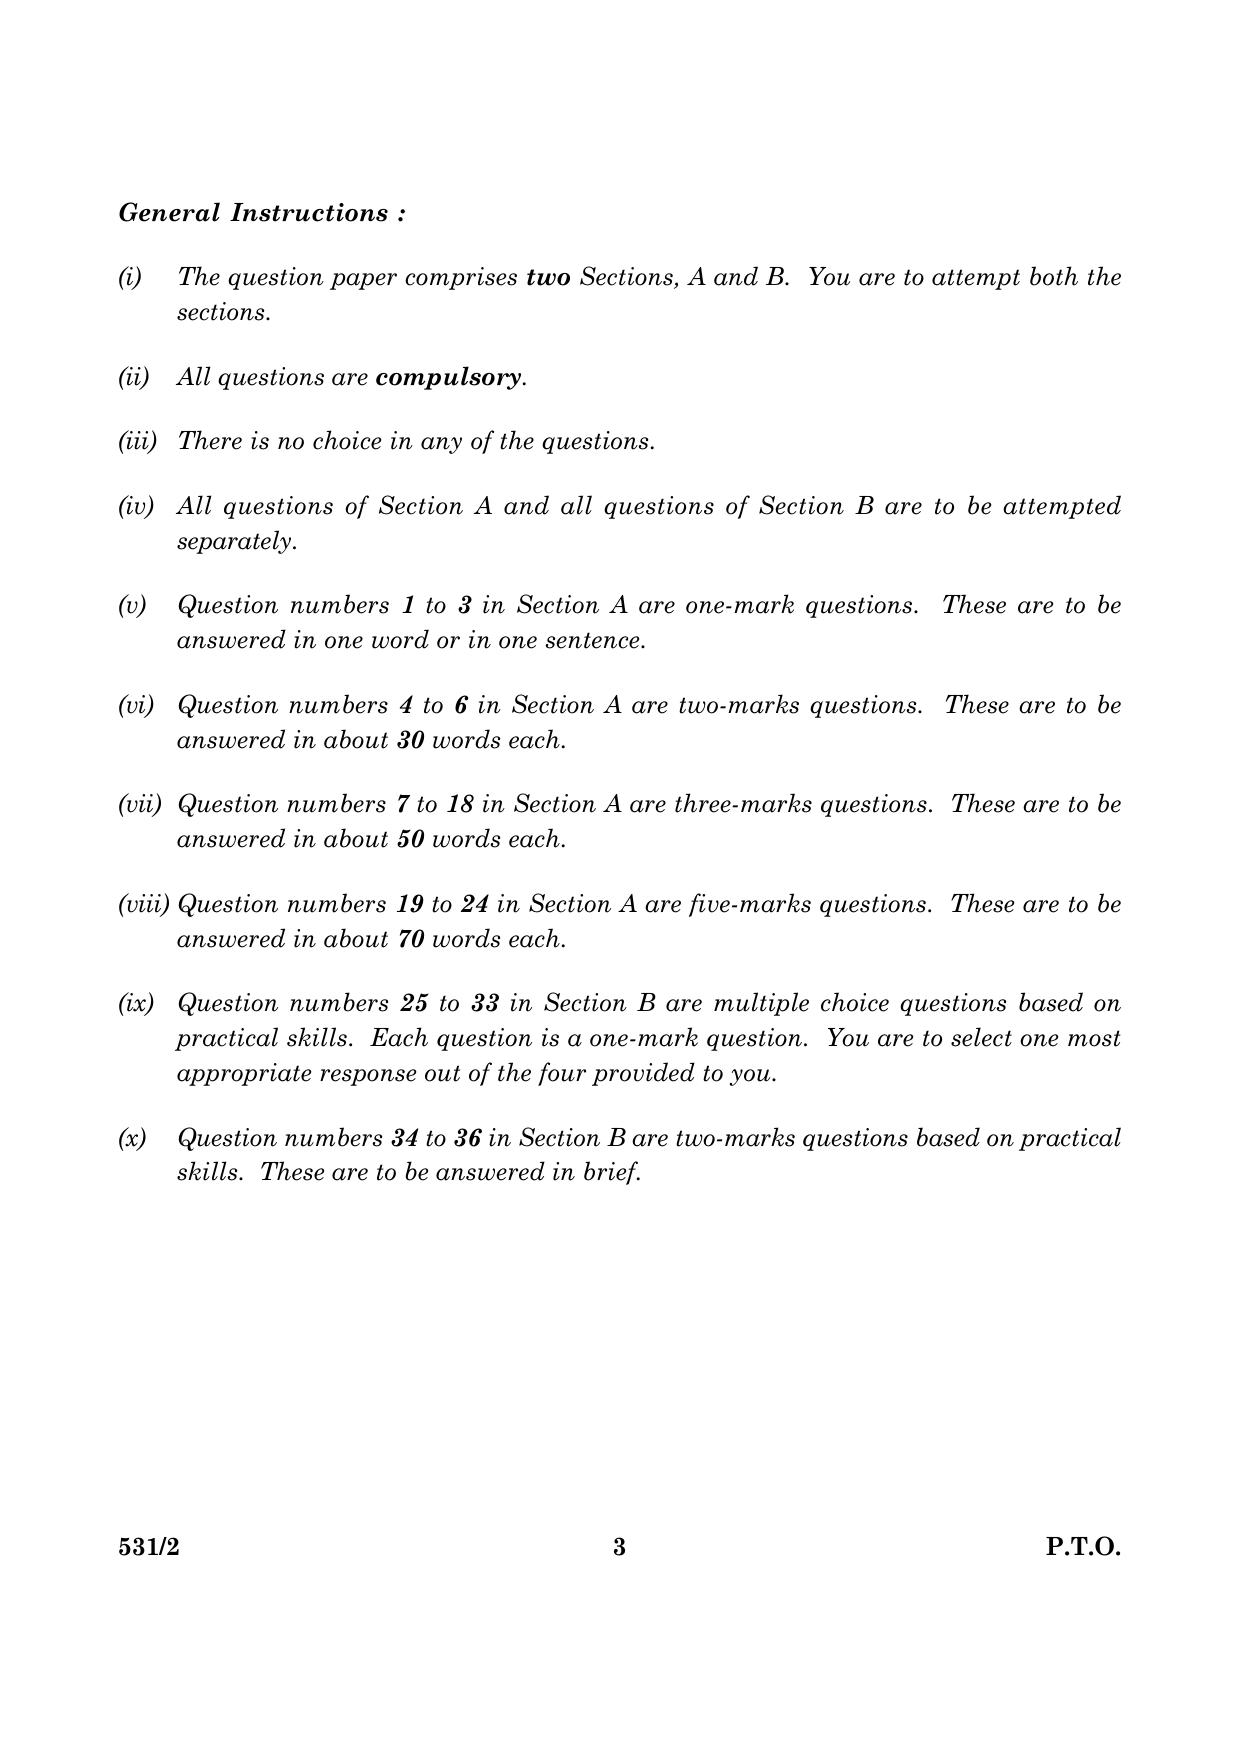 CBSE Class 10 NSQF 531 Science Set 2 2016 Question Paper - Page 3